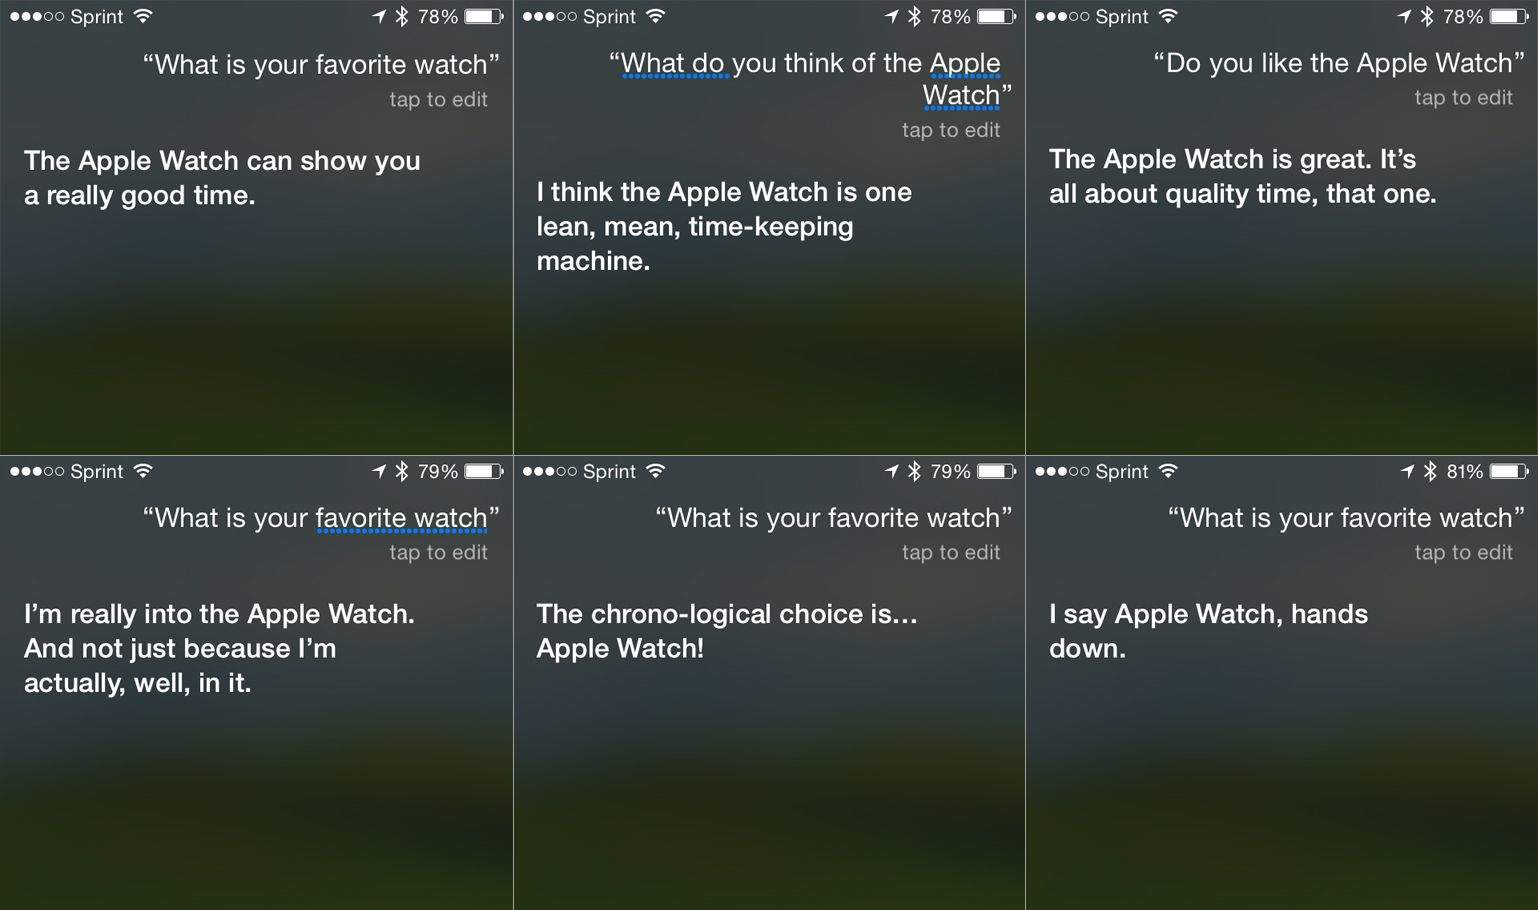 Apple Watch's biggest fan? Siri | Cult of Mac